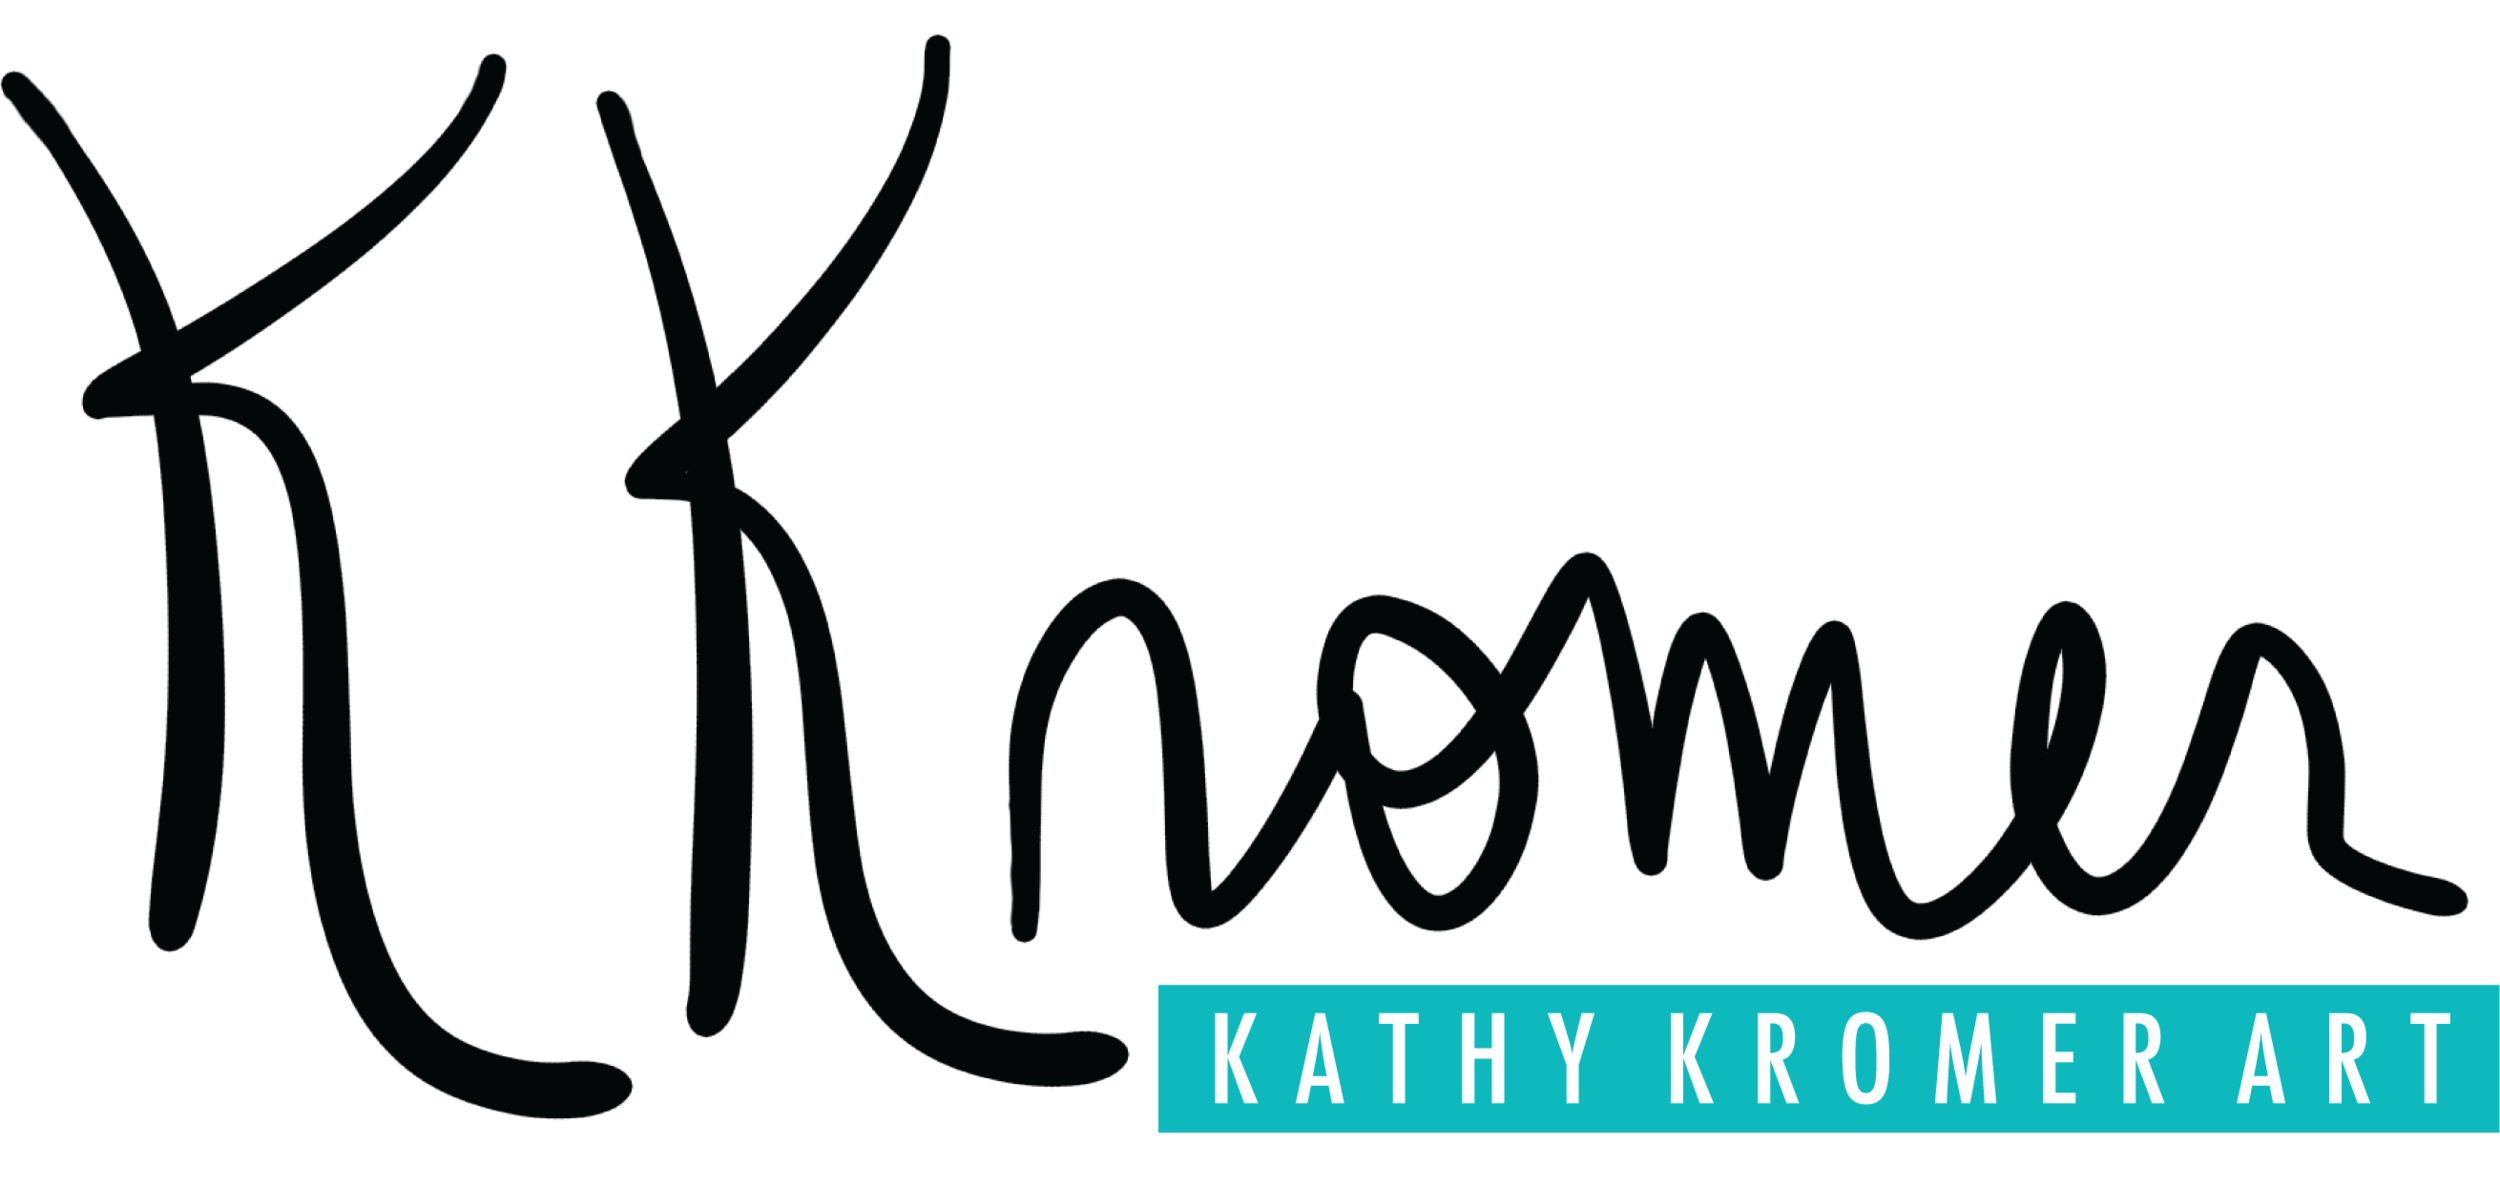 Kathy Kromer Art